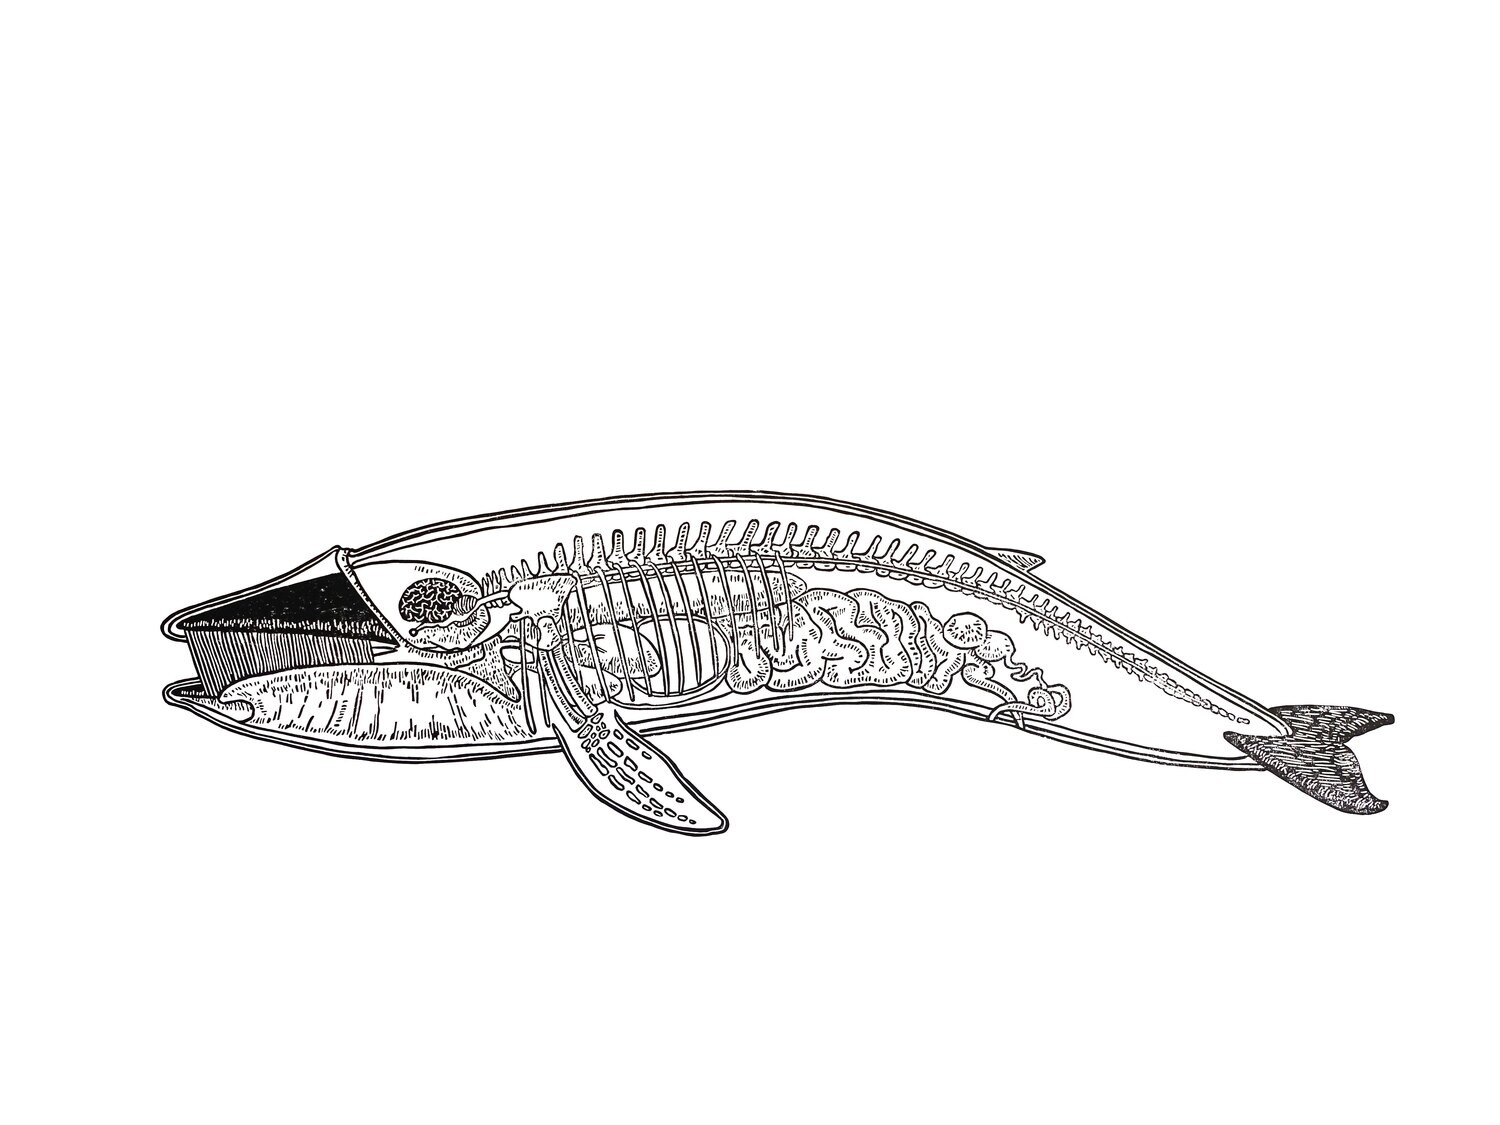 Anatomy of a whale